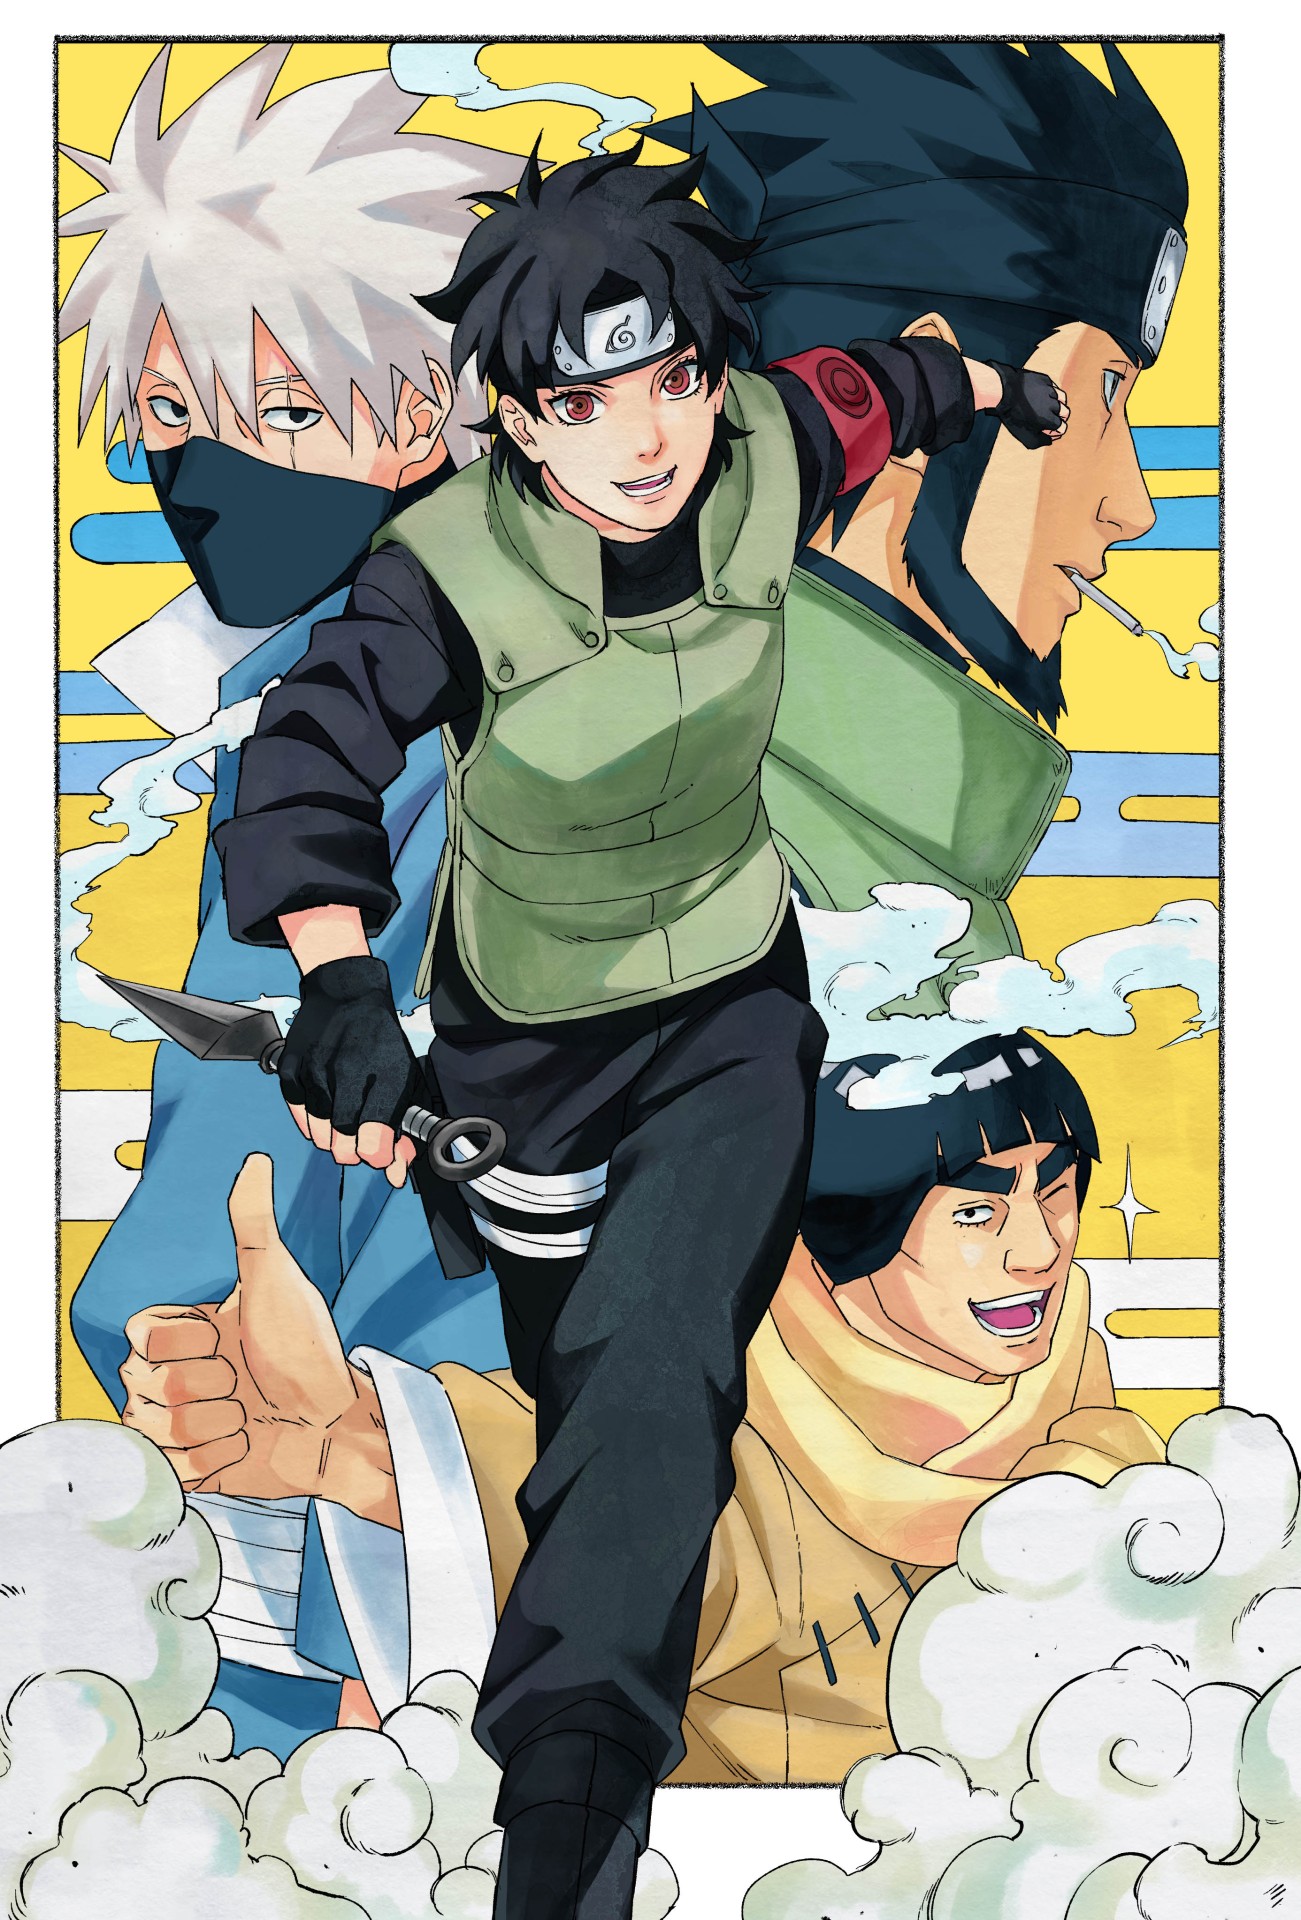 Manga Version of Naruto: Konoha's Story Novel Starts 10/29 on MANGA Plus! |  NARUTO OFFICIAL SITE (NARUTO & BORUTO)